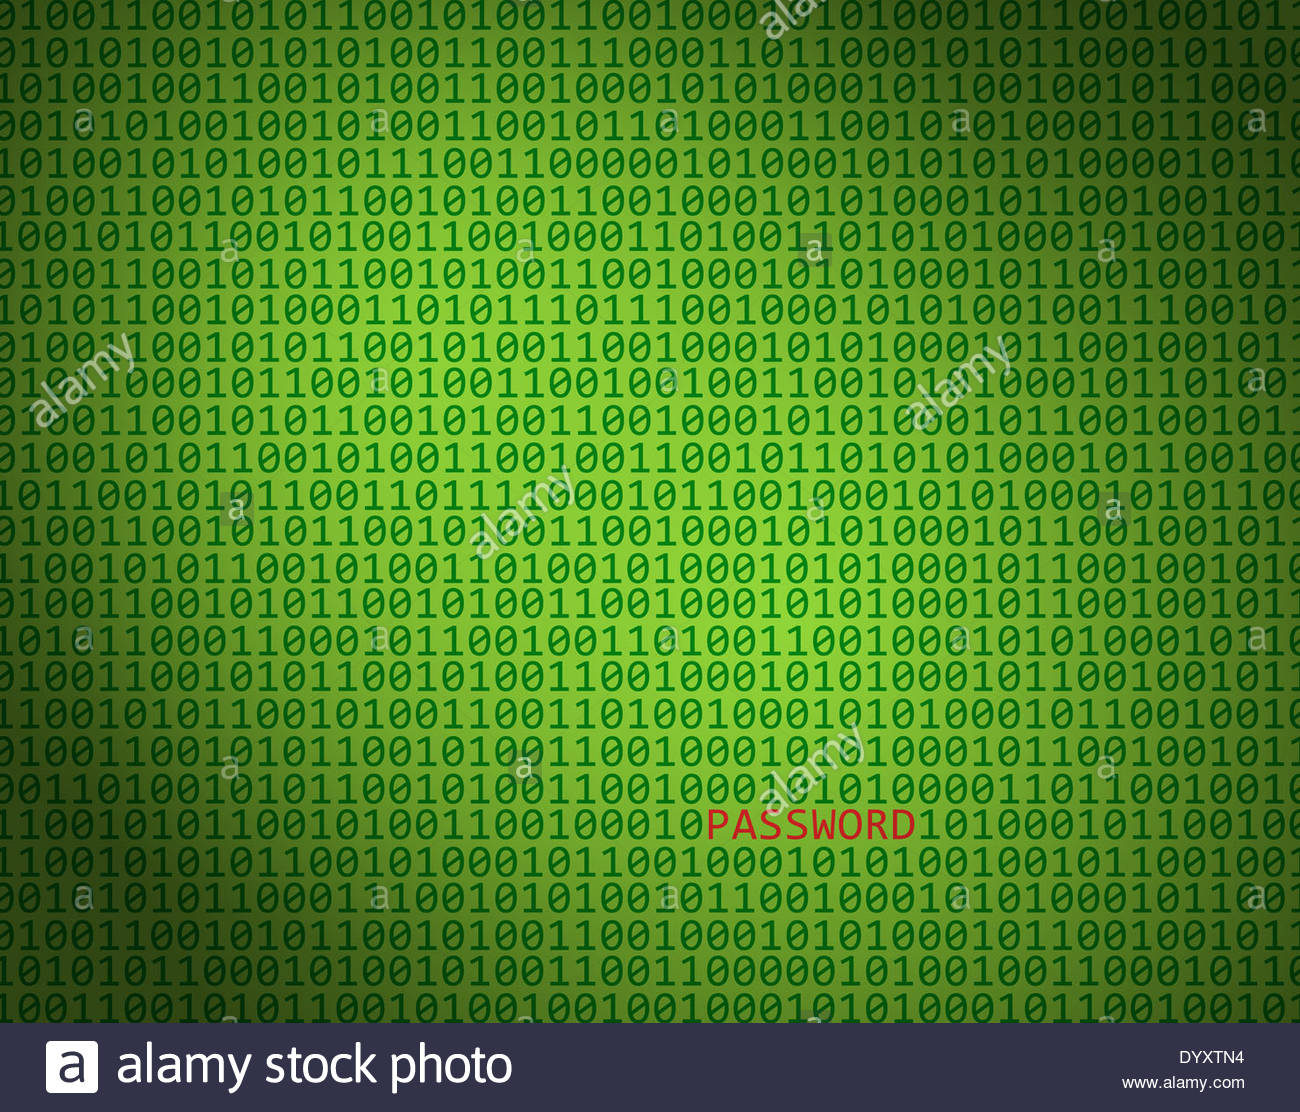 Password Hacking Background Stock Photo Alamy